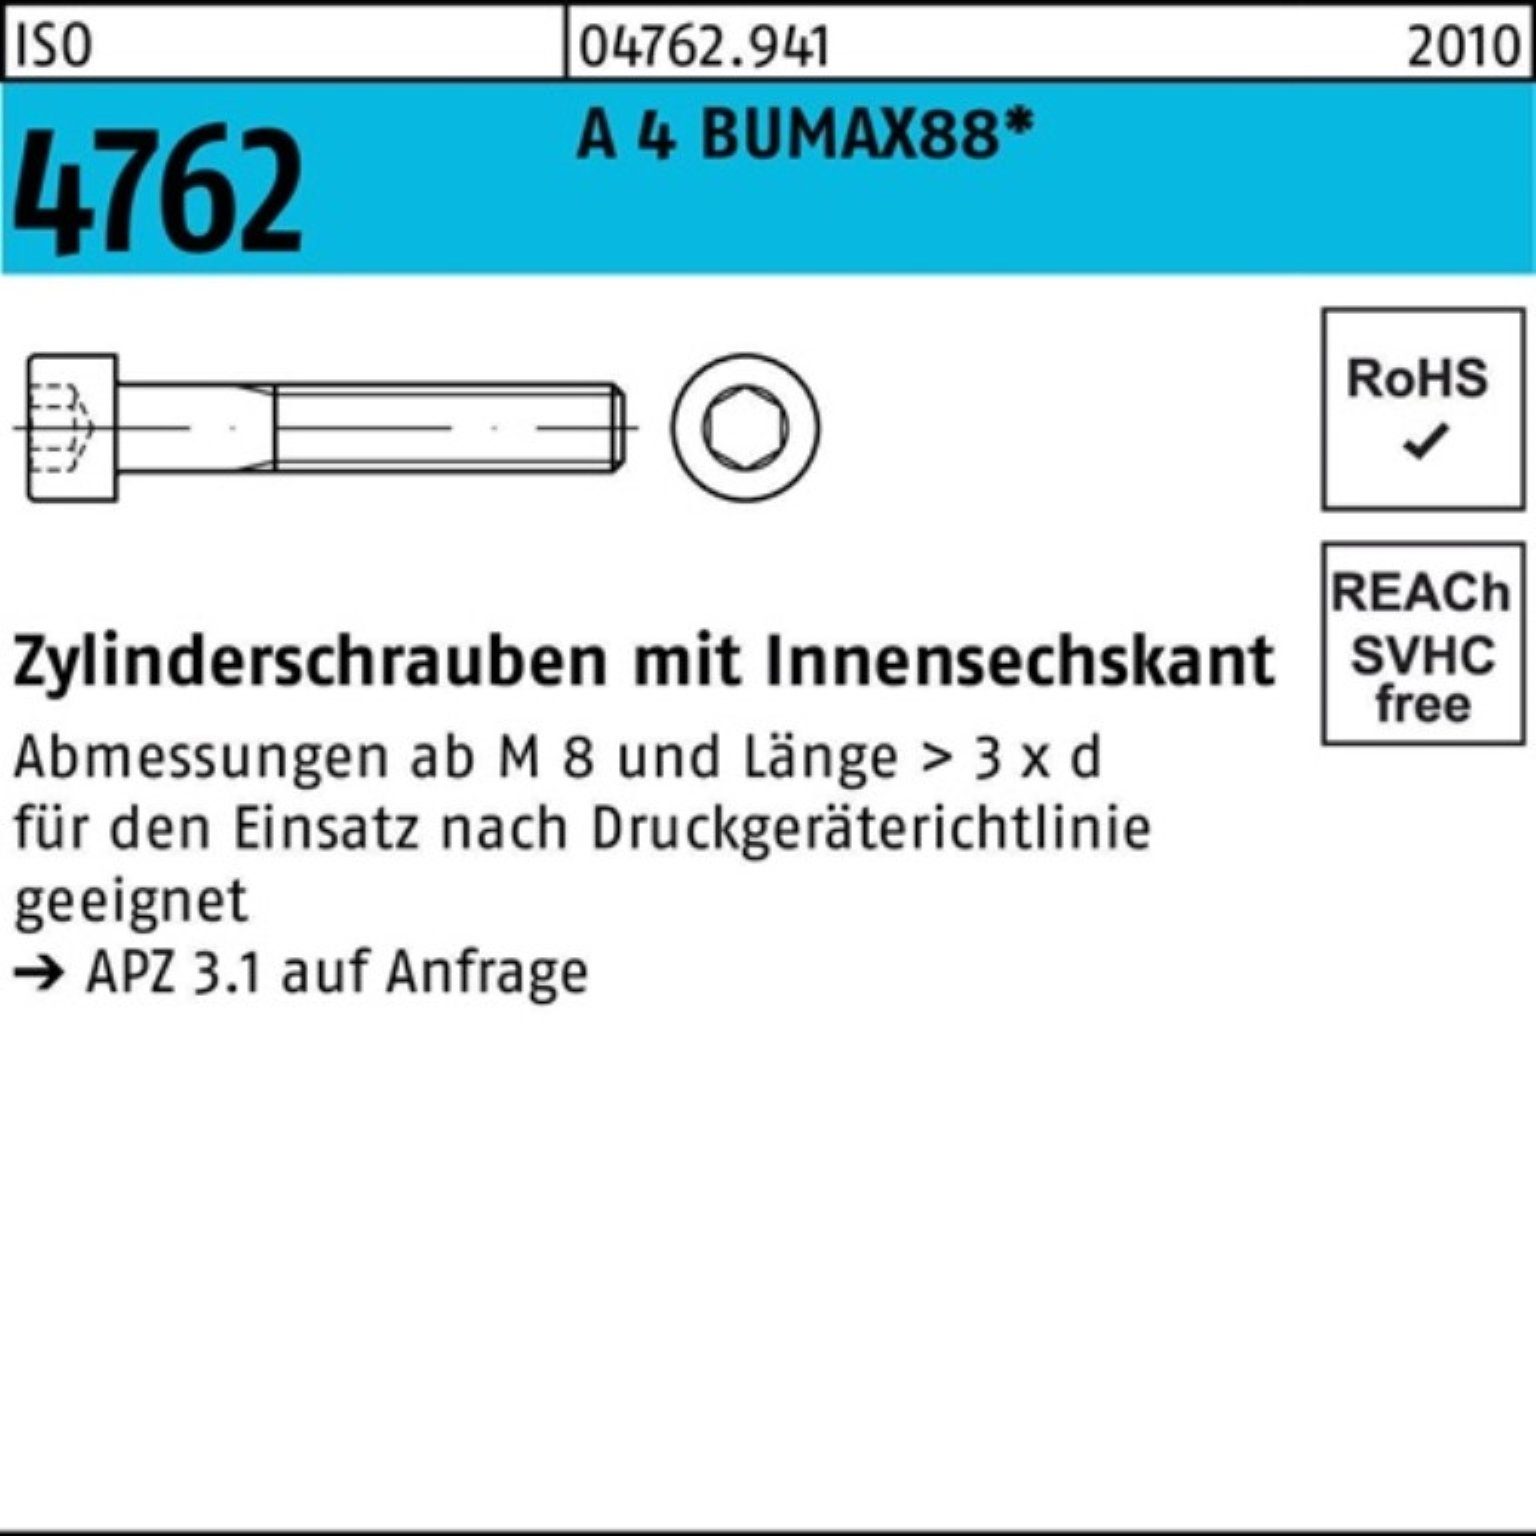 Bufab Zylinderschraube 100er Pack Zylinderschraube ISO 4762 Innen-6kt M6x 45 A 4 BUMAX88 100